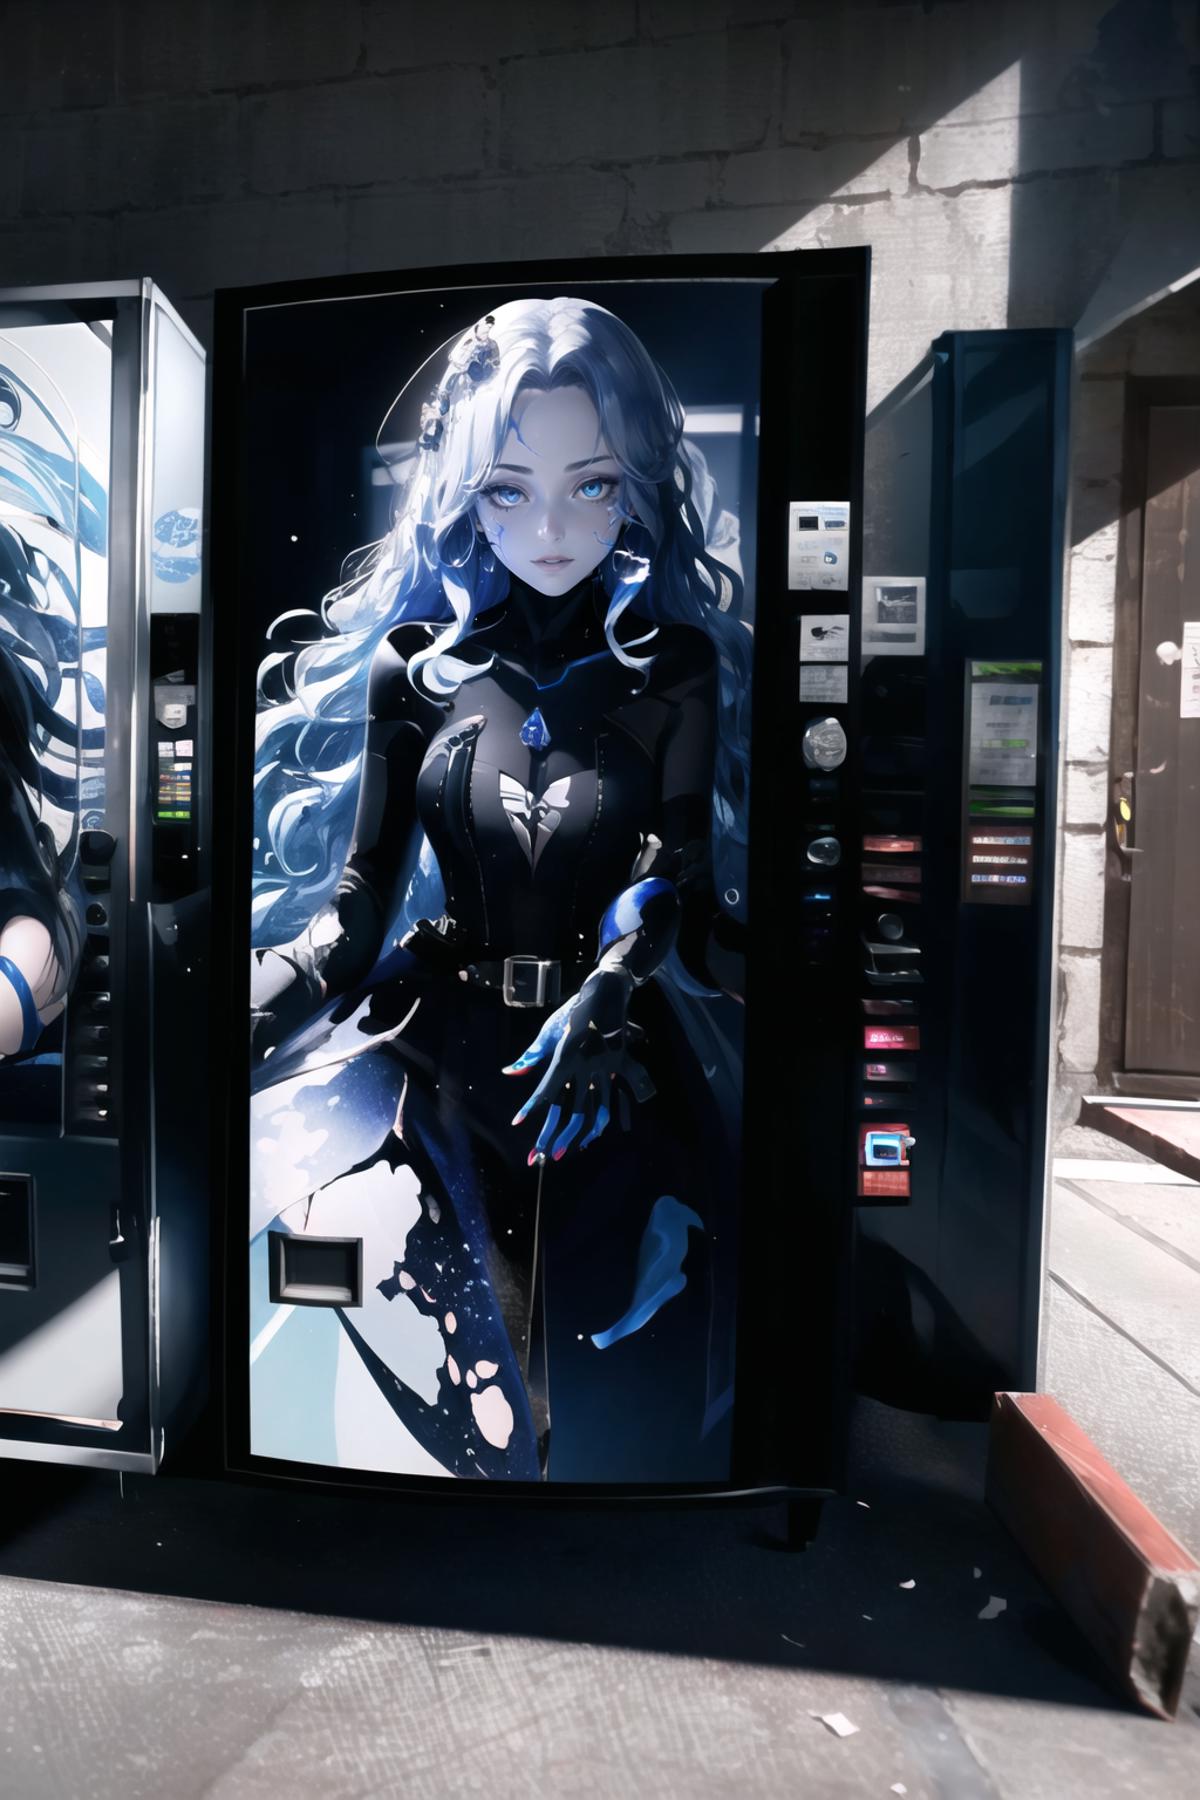 Vending Machine | Concept LoRA image by FallenIncursio